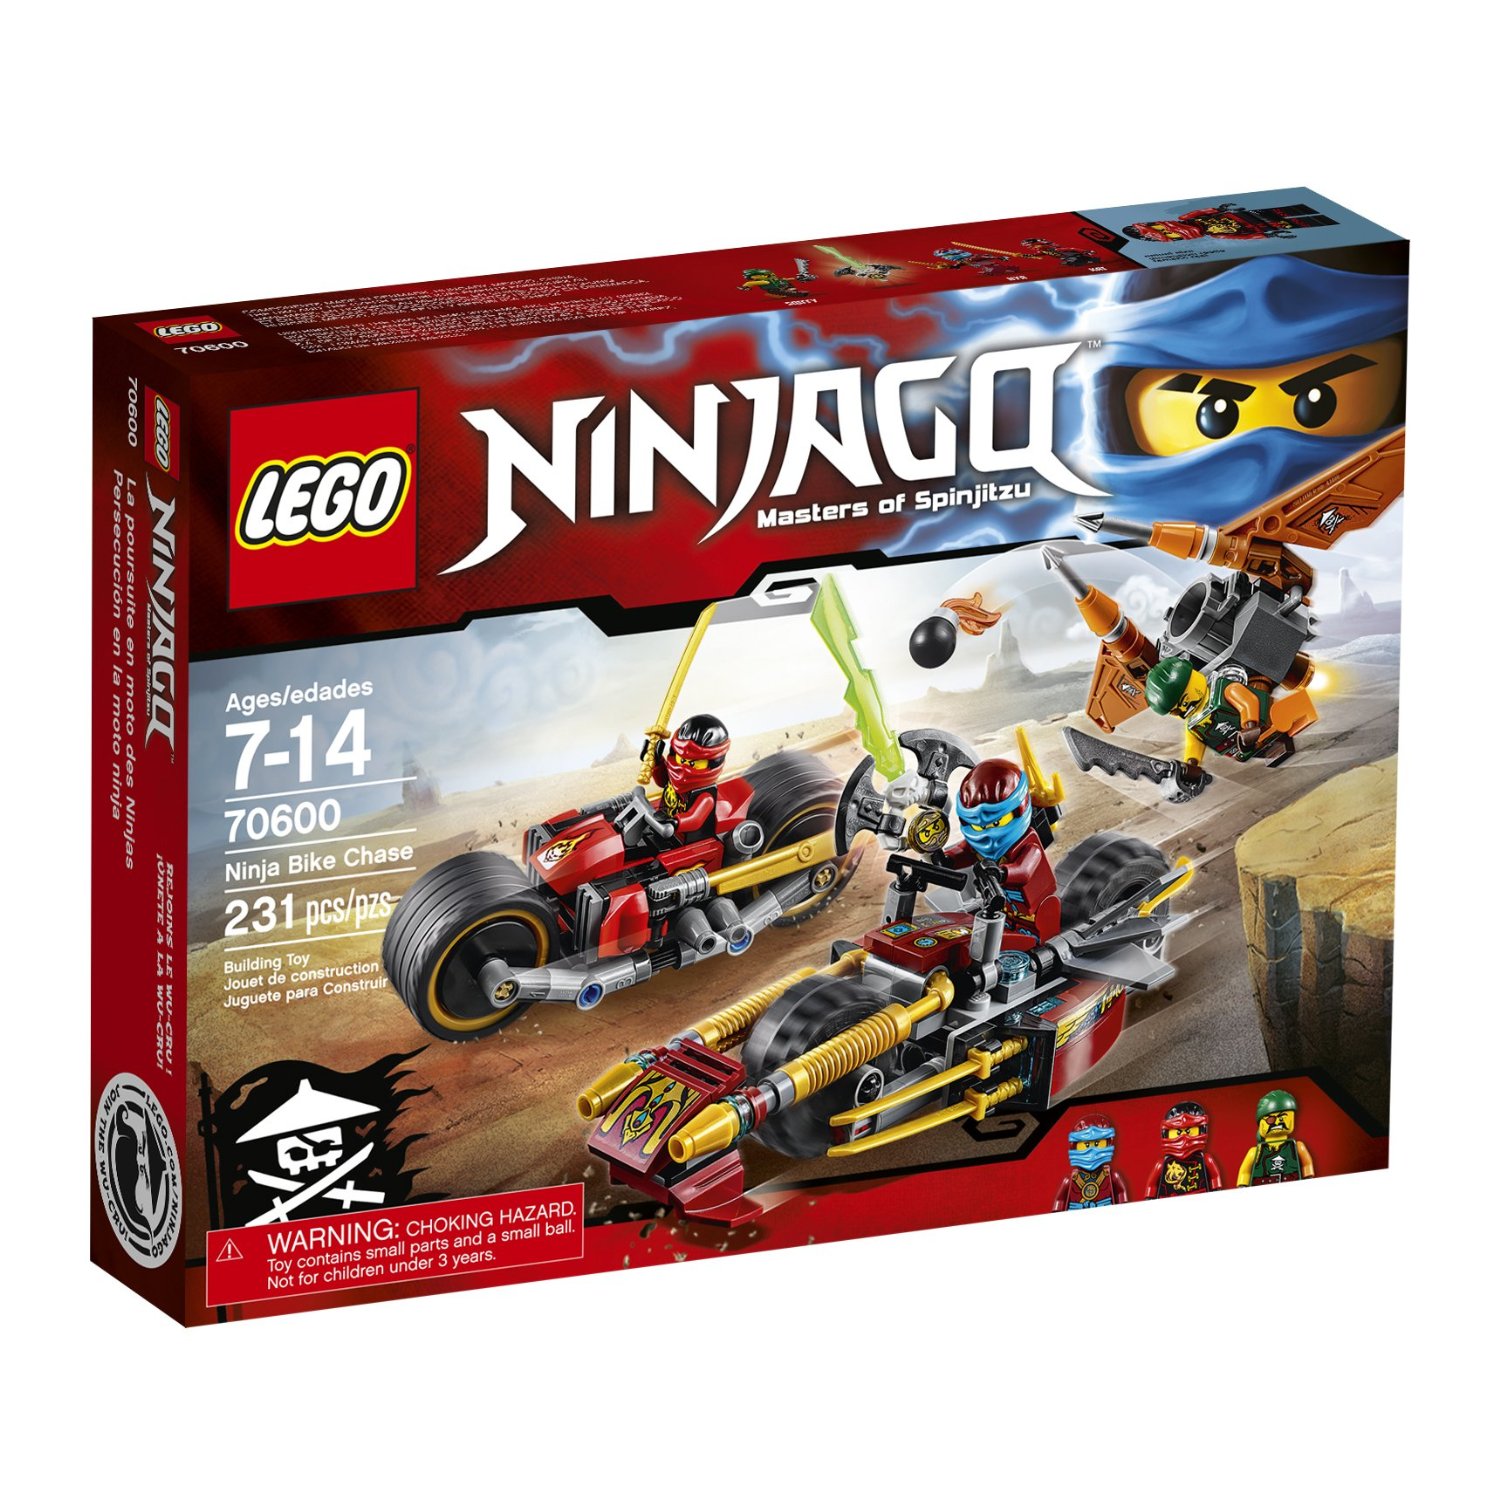 LEGO Ninjago Ninja Bike Chase – Just $15.83!